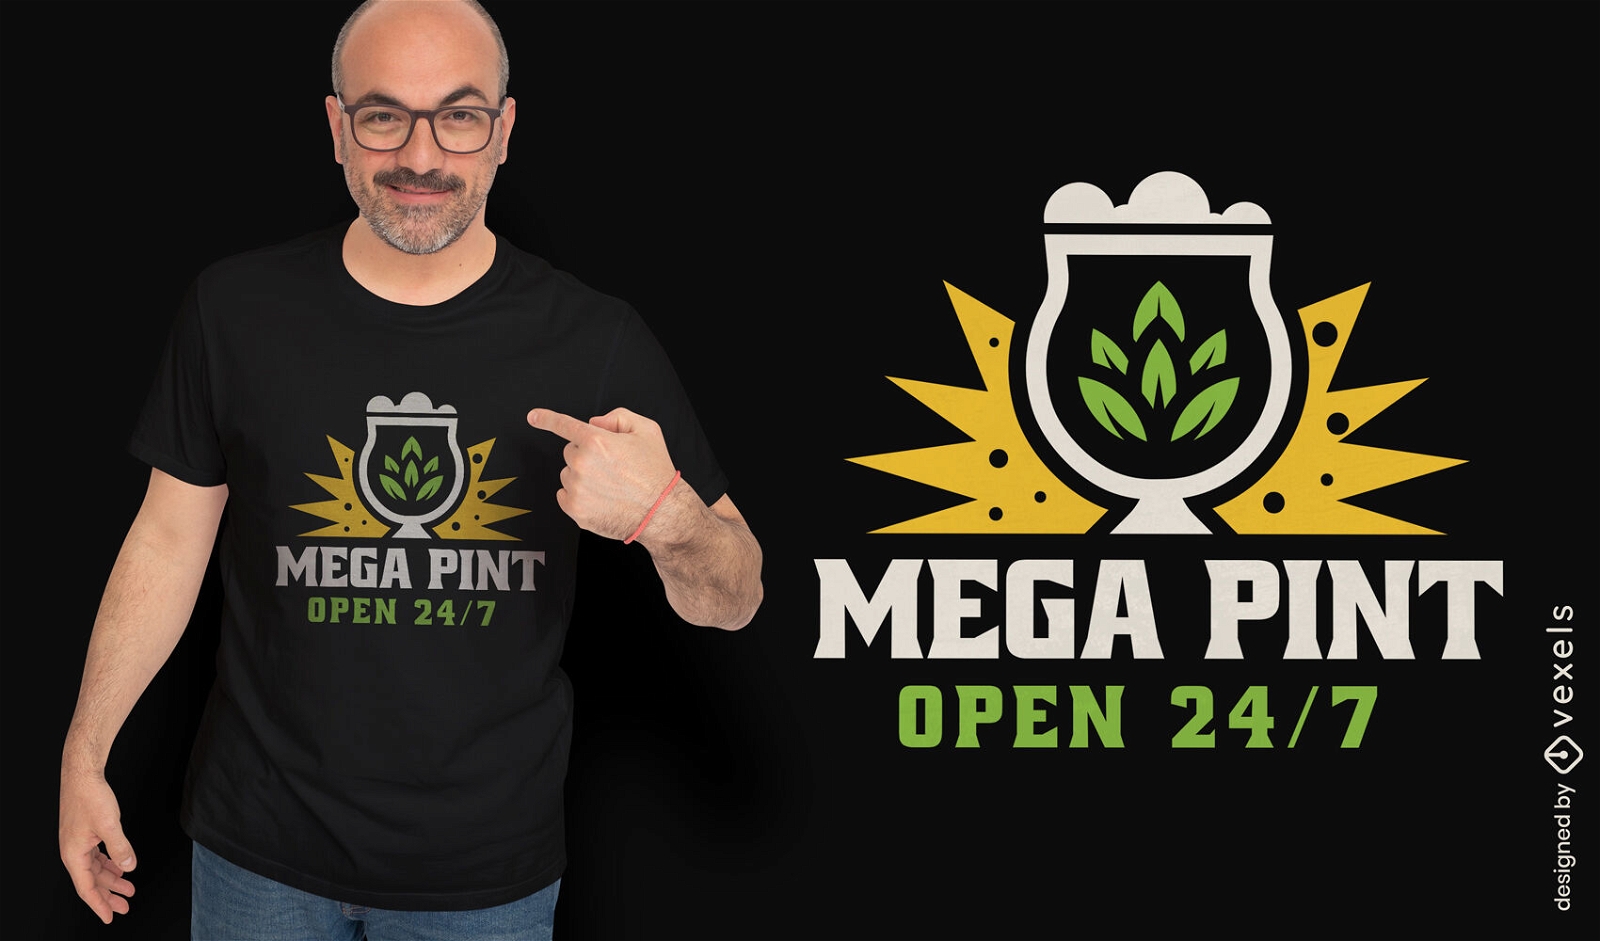 Mega pint beer glass t-shirt design